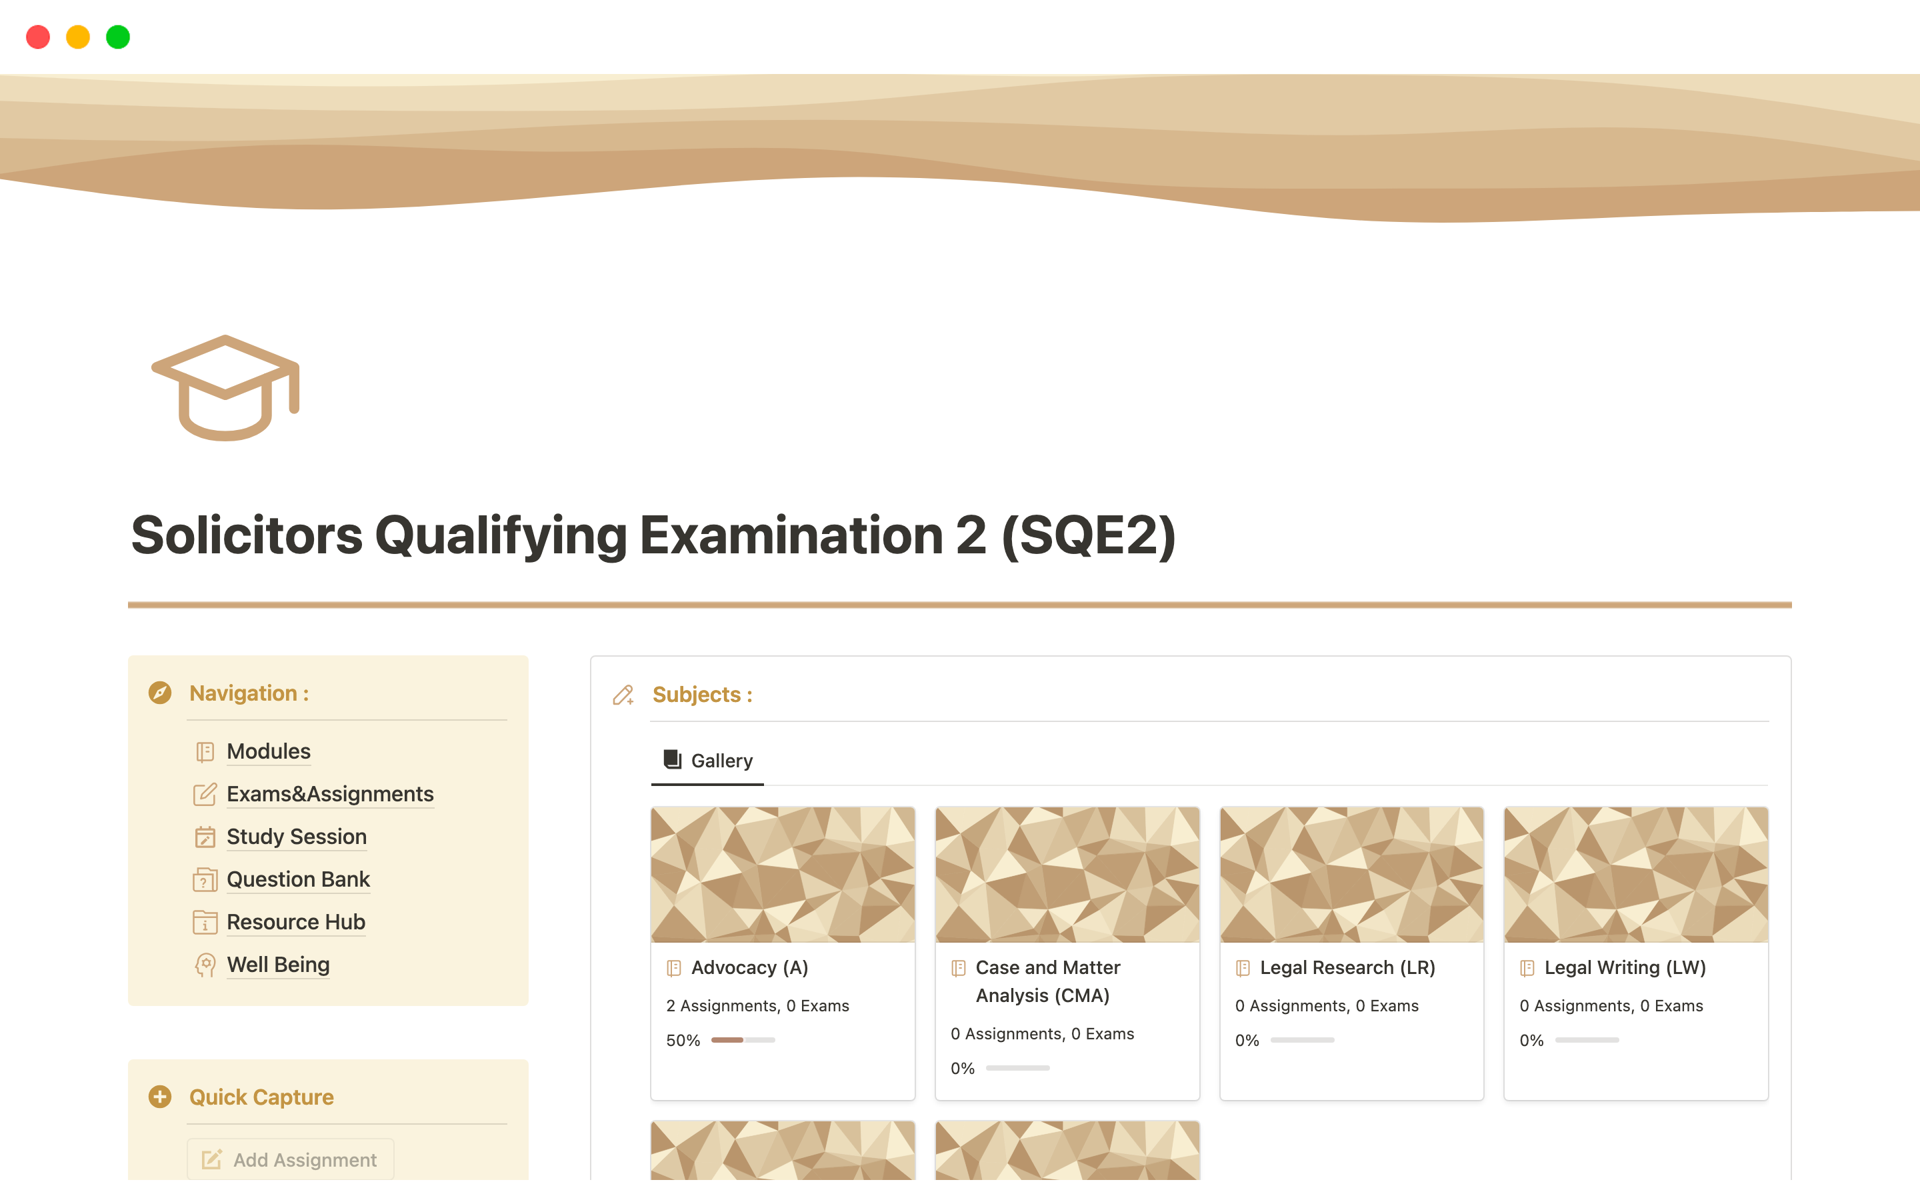 Vista previa de plantilla para Solicitors Qualifying Examination 2 (SQE2)